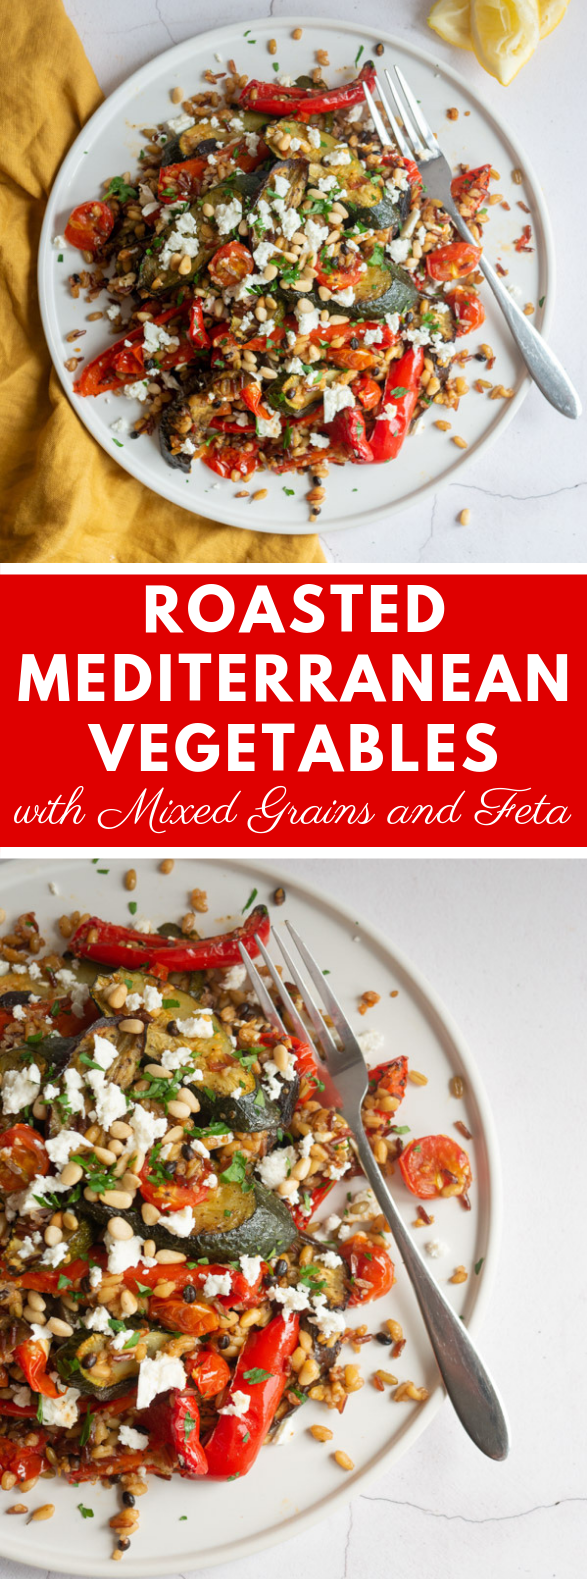 ROASTED MEDITERRANEAN VEGETABLES WITH MIXED GRAINS AND FETA #vegetarian #weeknightdinner